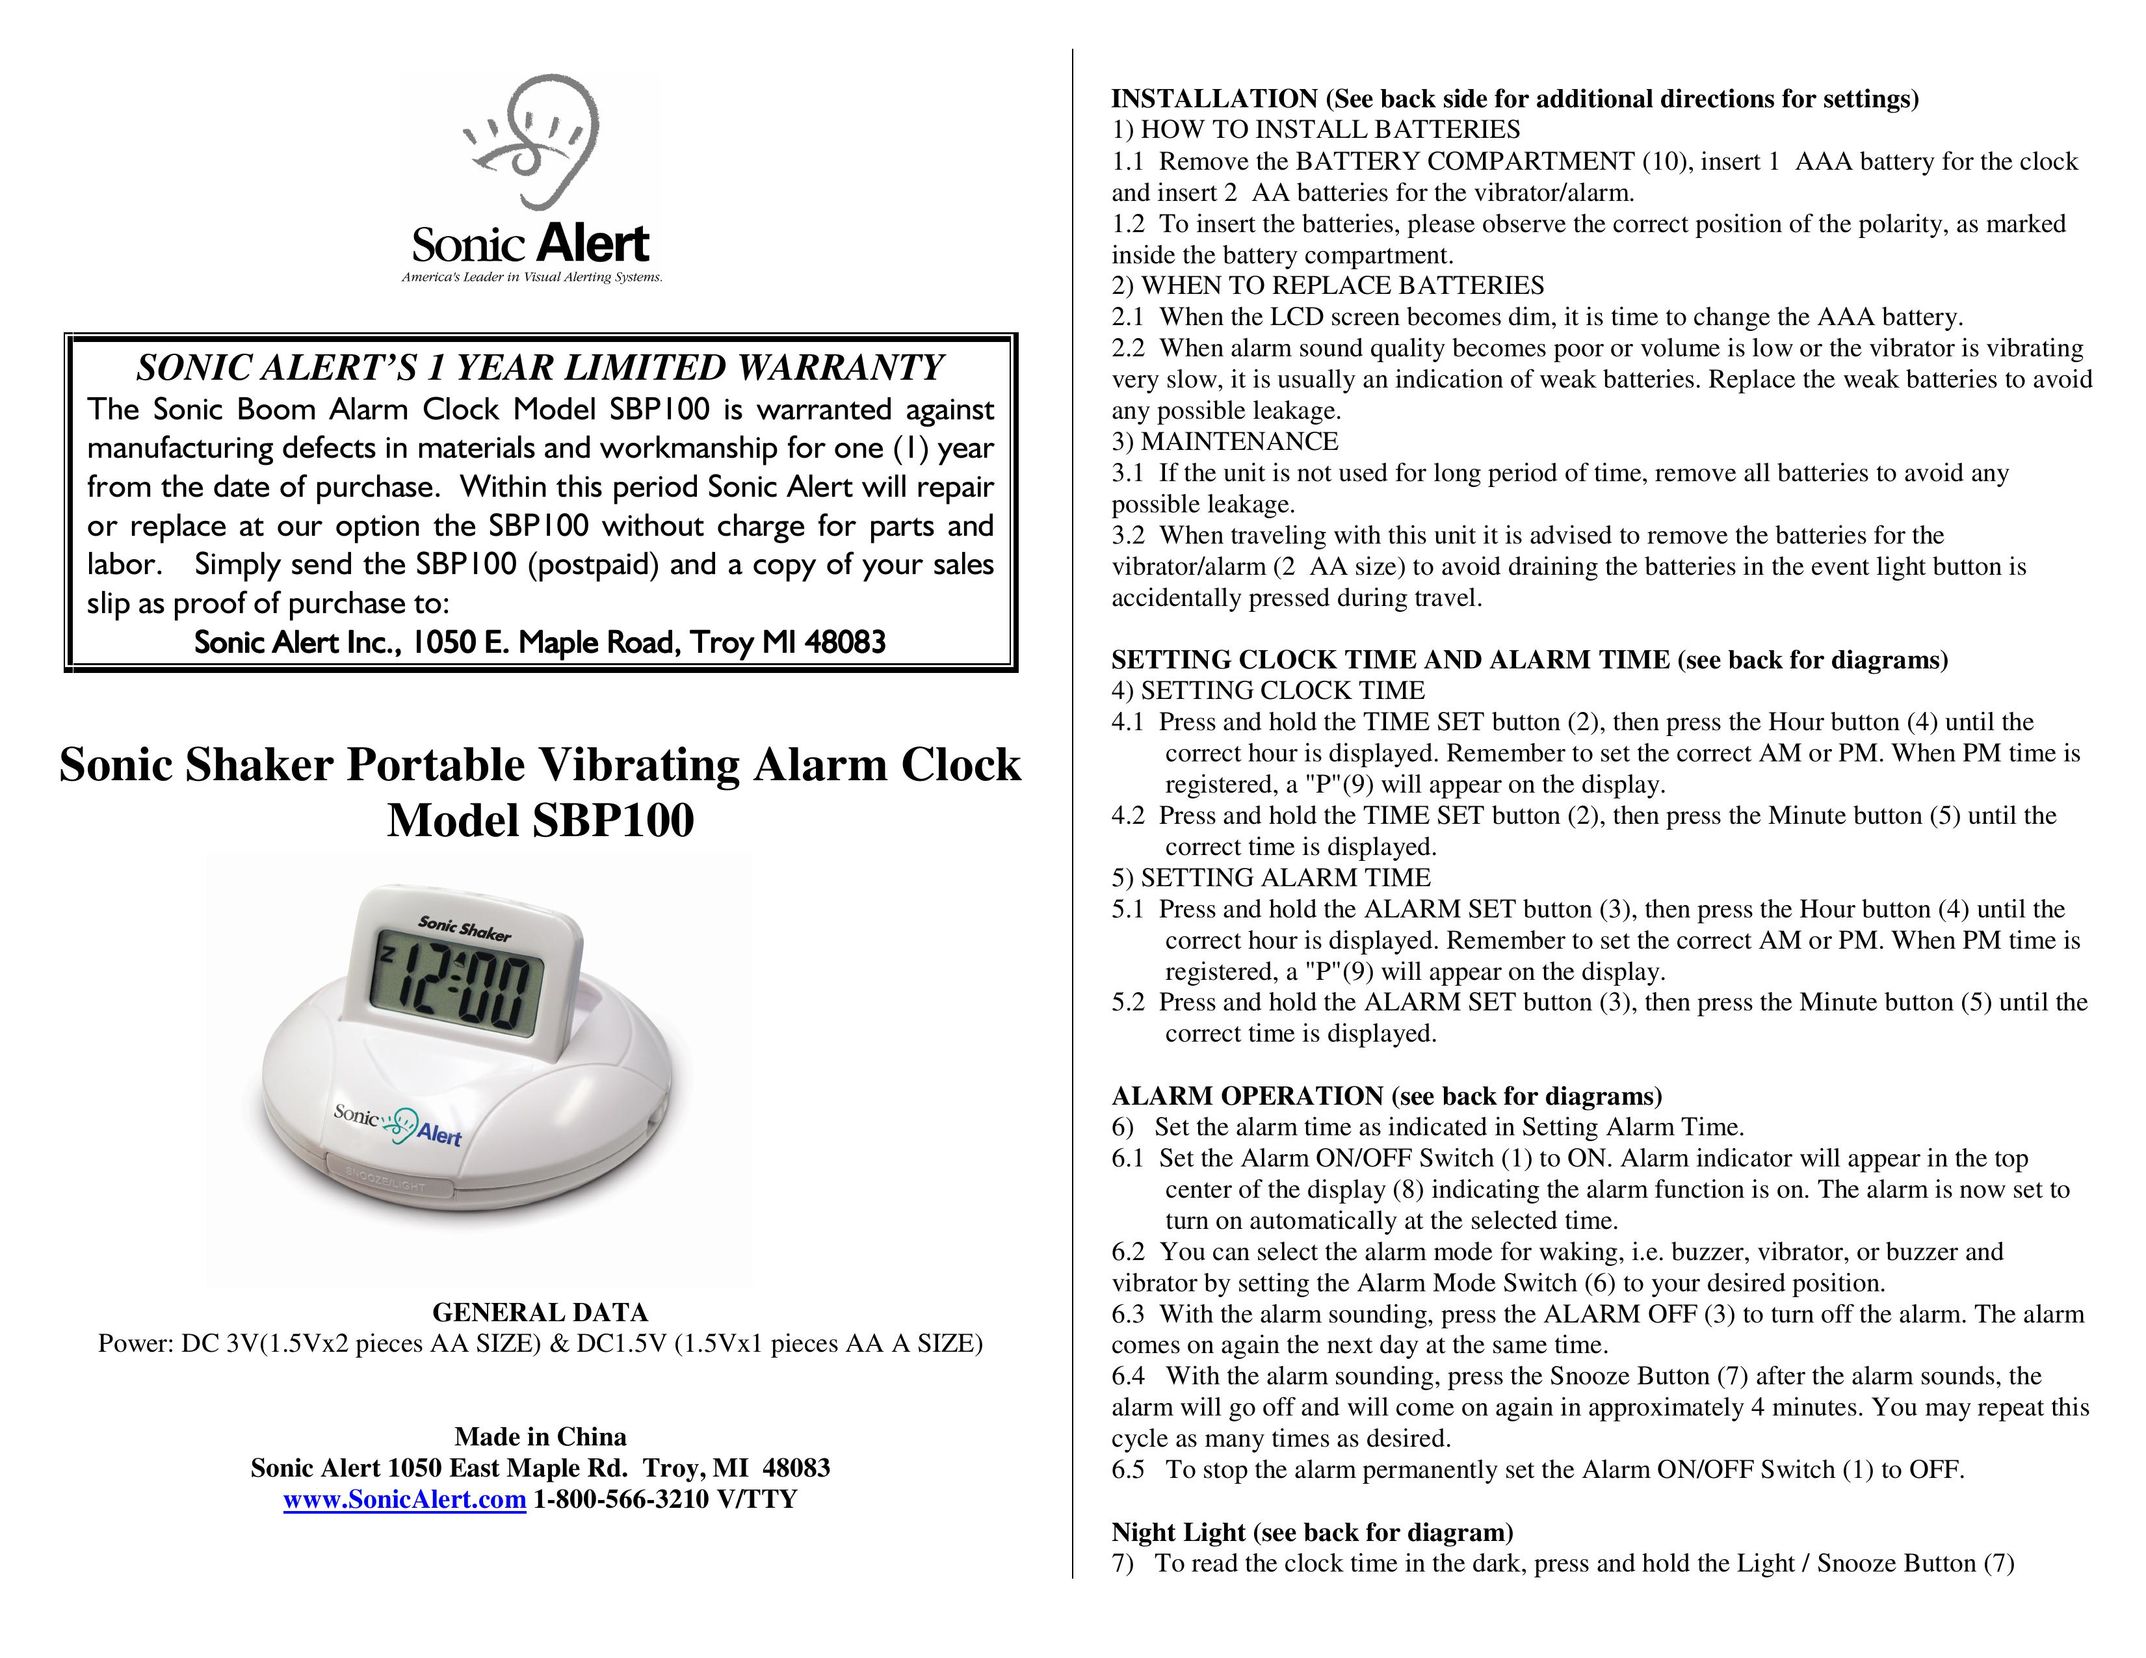 Sonic Alert SBP100 Home Security System User Manual